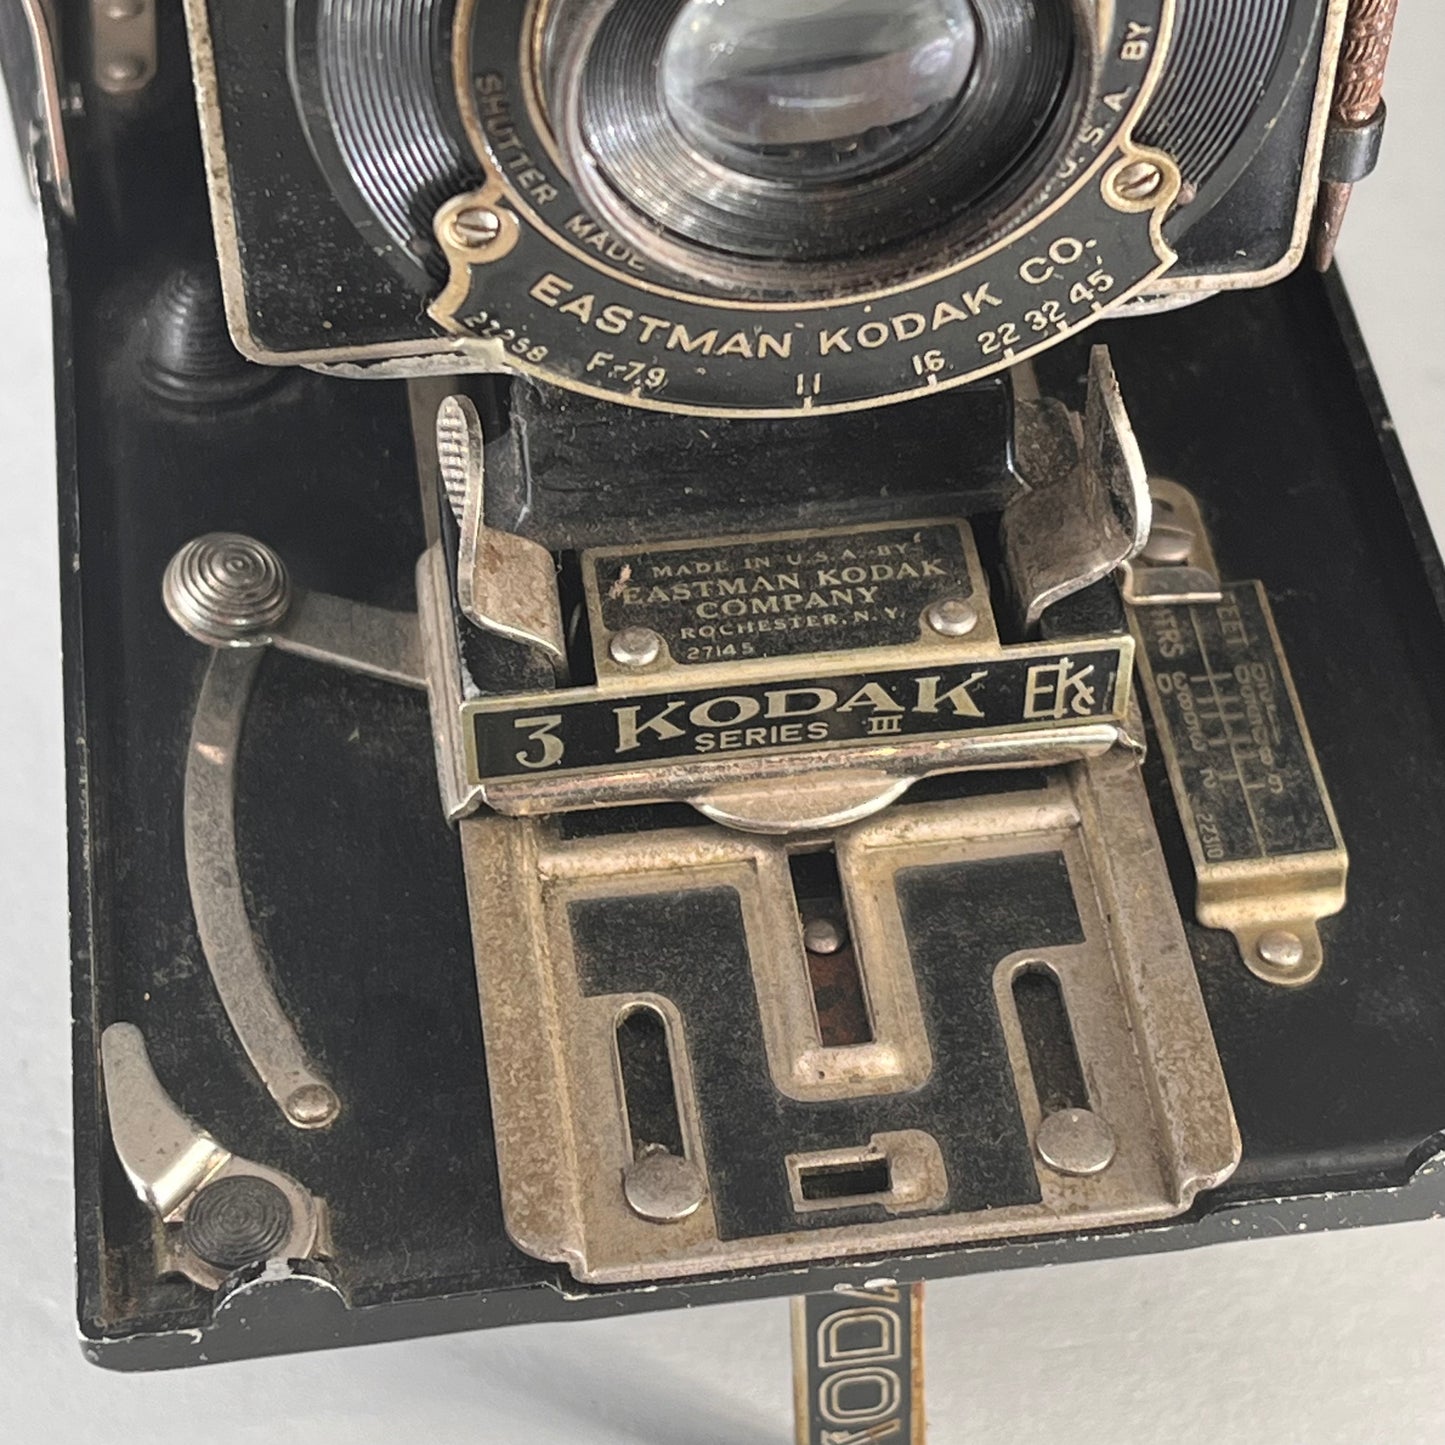 Kodak series iii